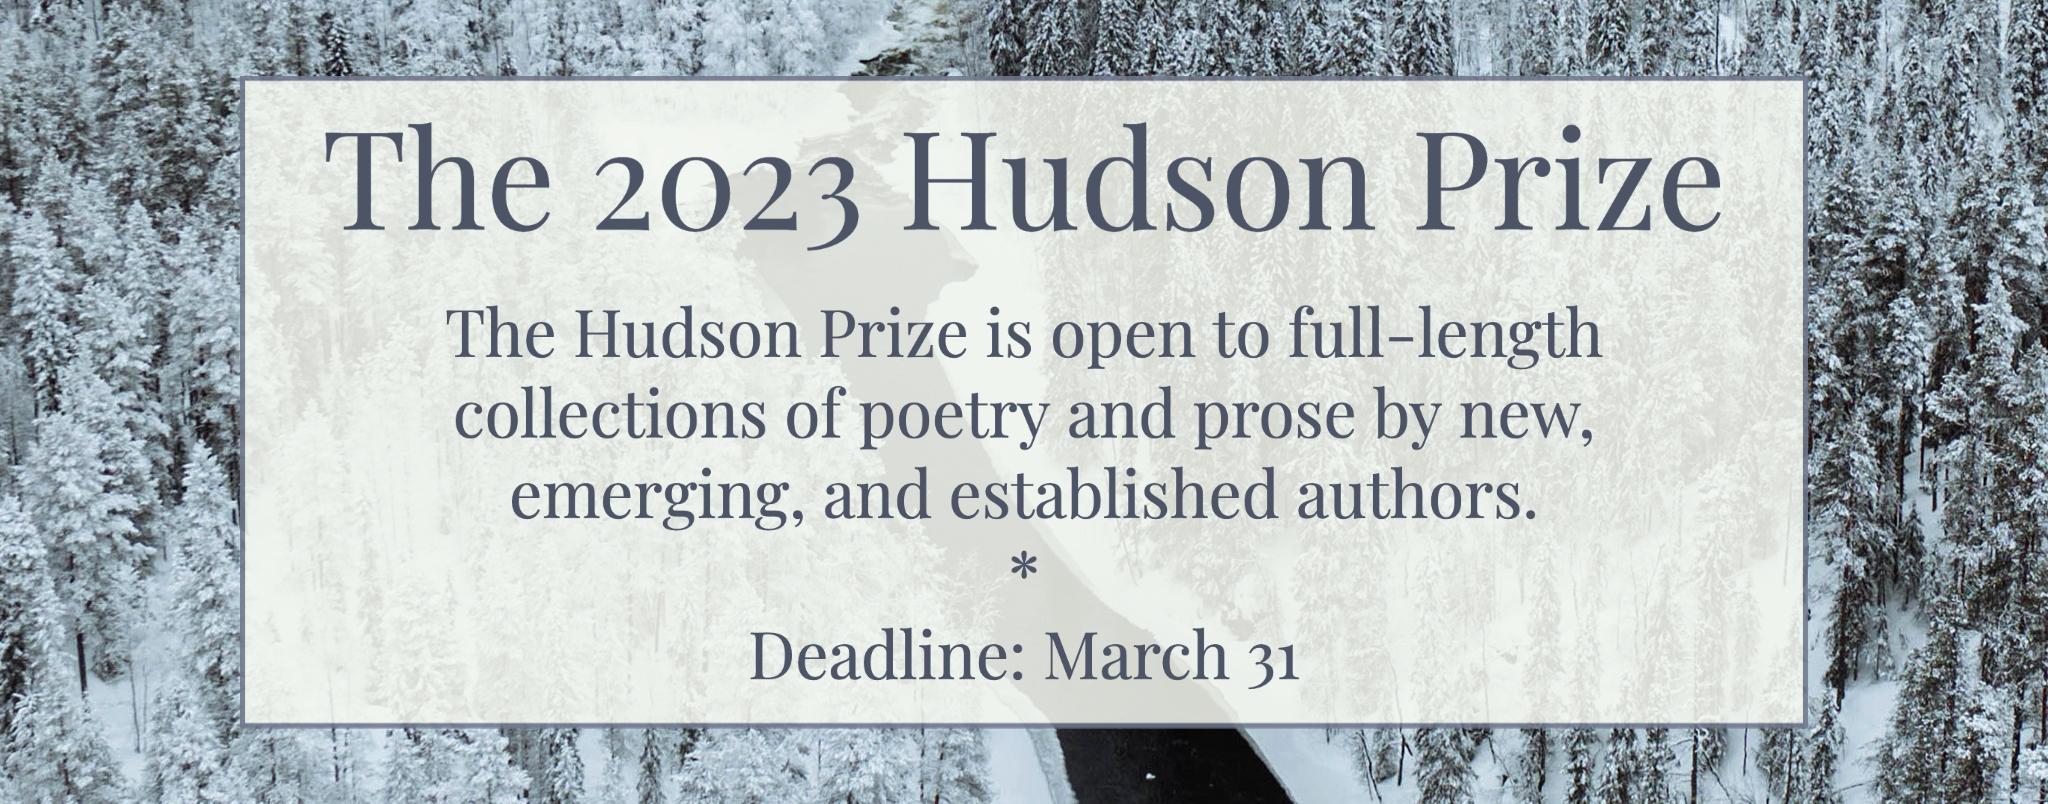 The Hudson Prize